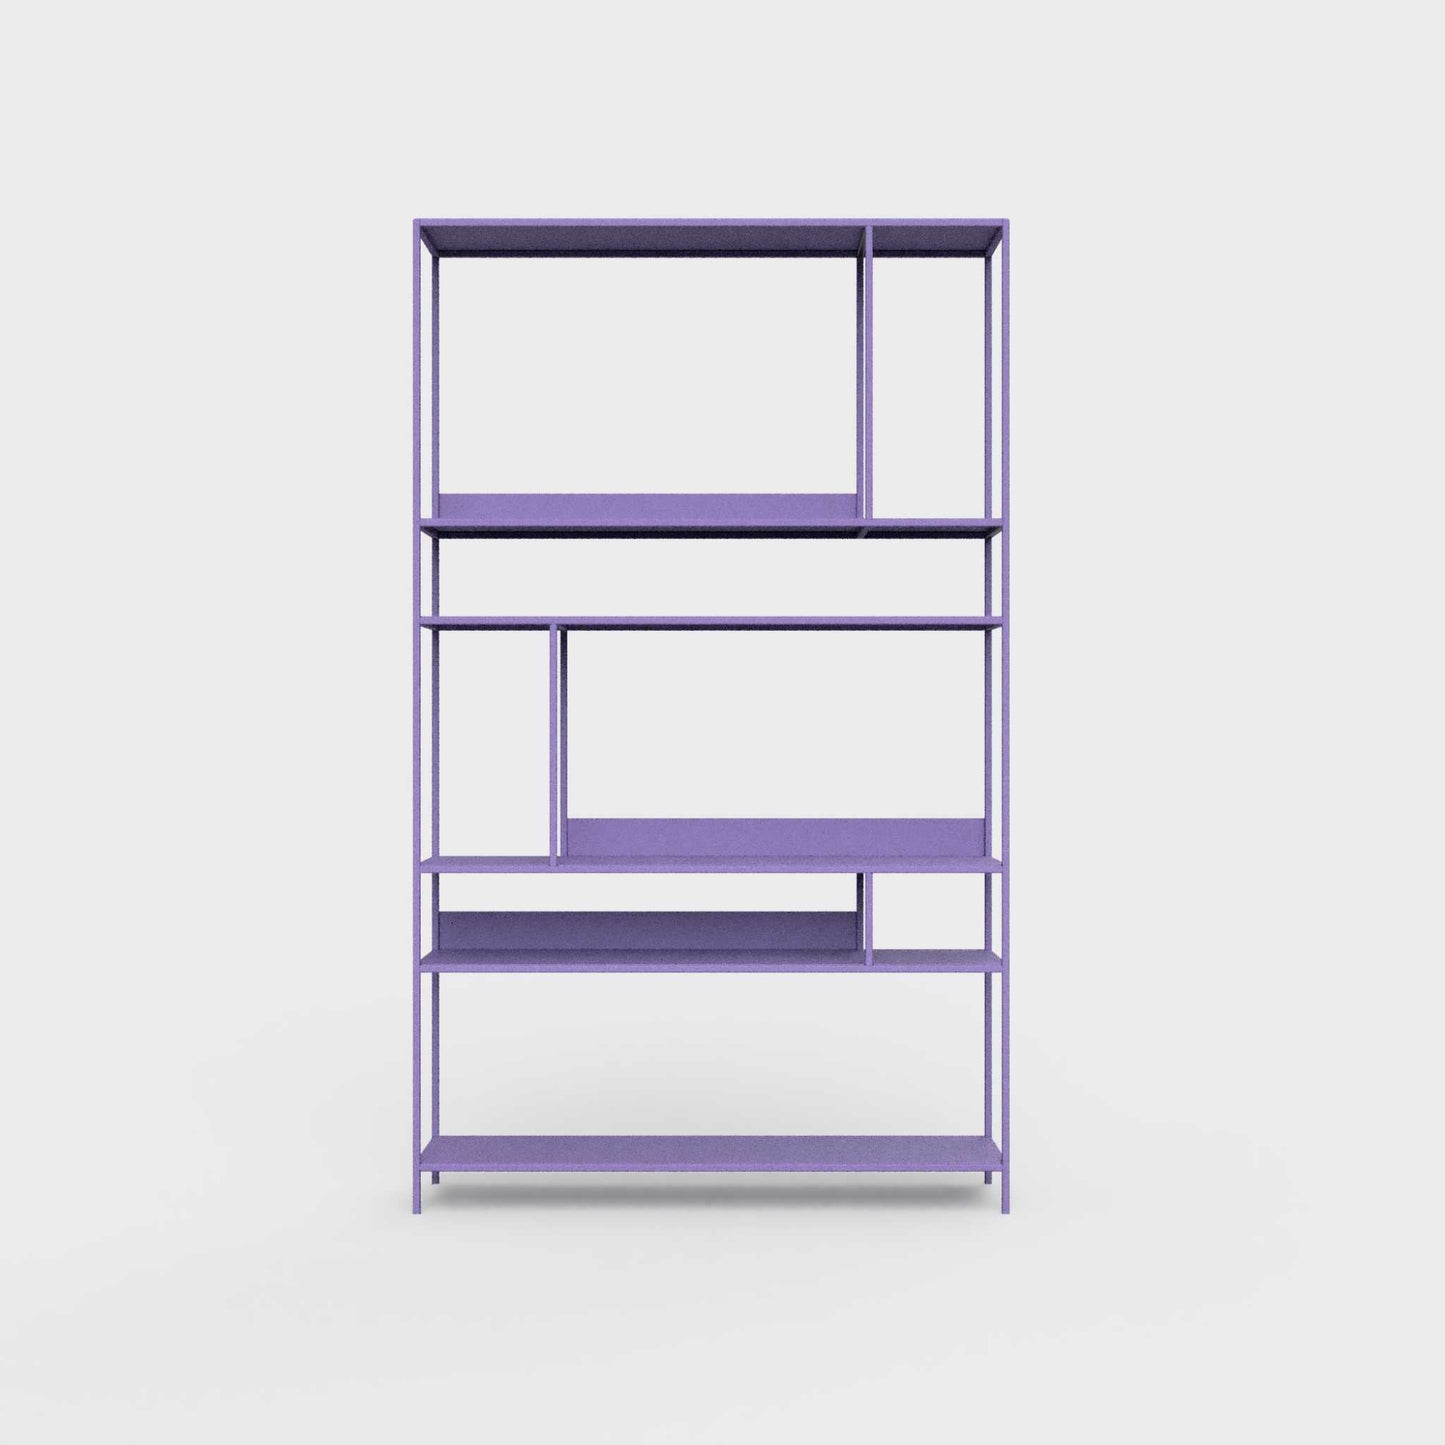 ÉTAUDORÉ Floks 01 powder coated steel bookcase in iris violet